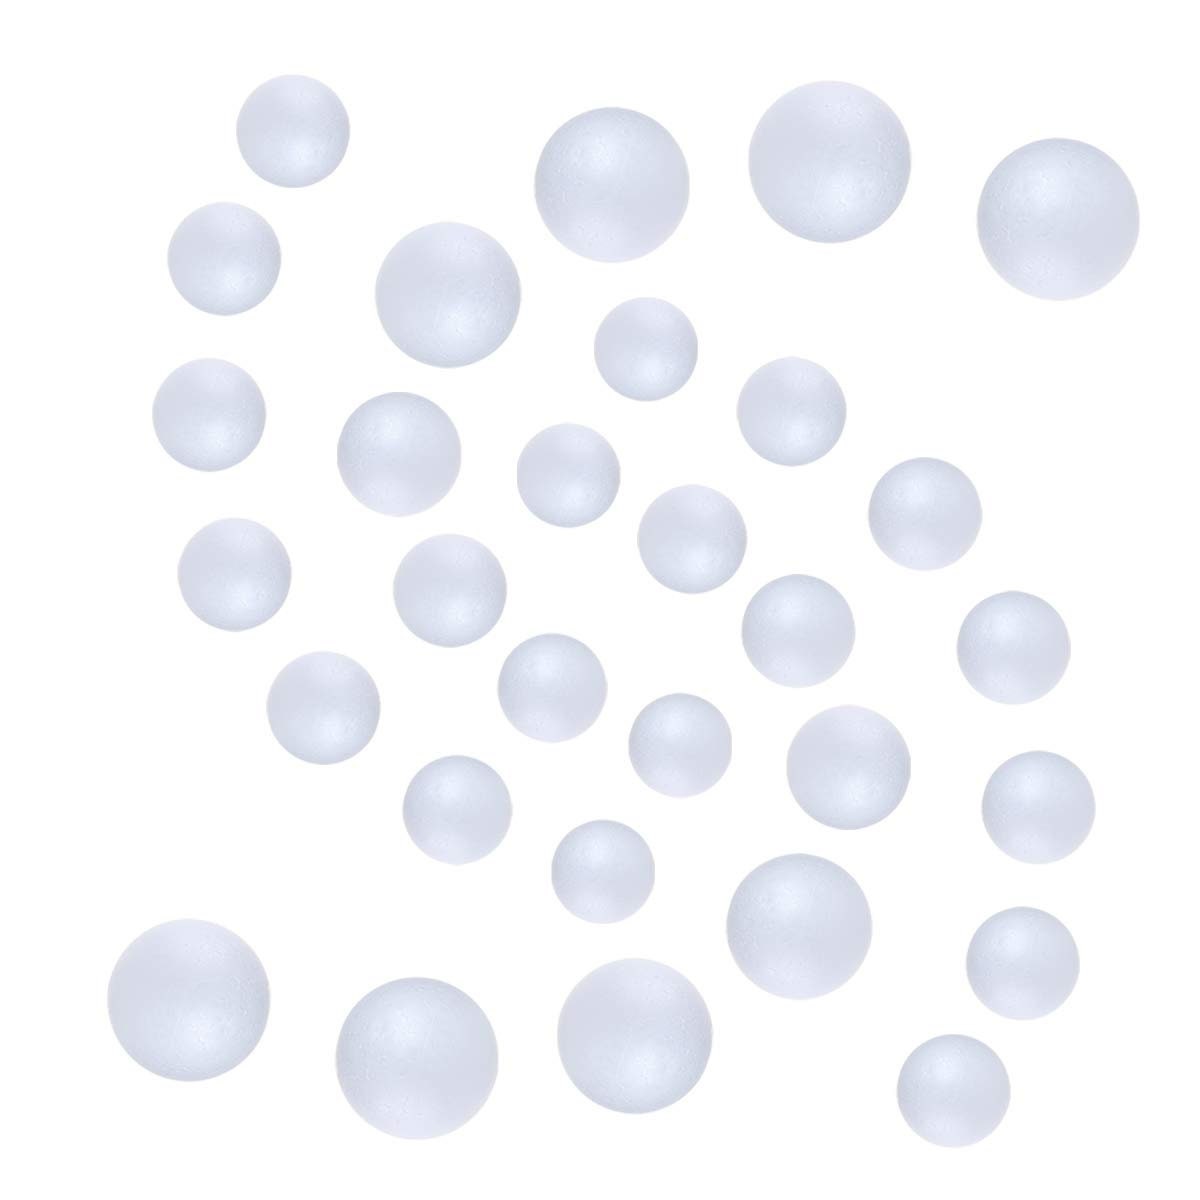 Styrofoam Balls, 6 Inch, 6 Per Pack HYG51106 49.99 New